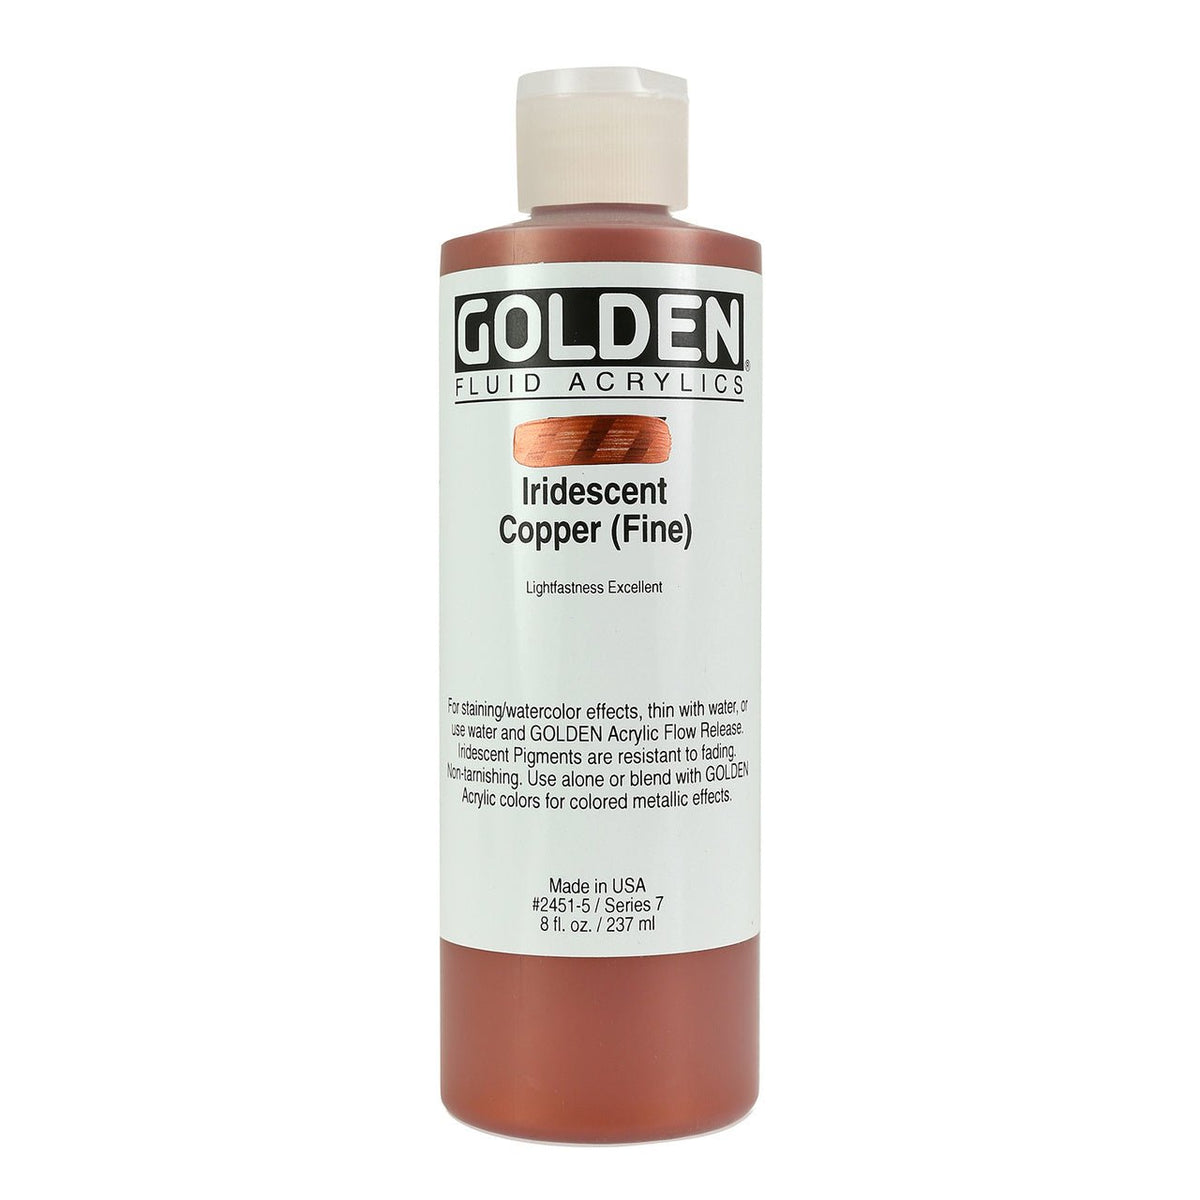 Golden Fluid Acrylic Iridescent Copper (fine) 8 oz - merriartist.com